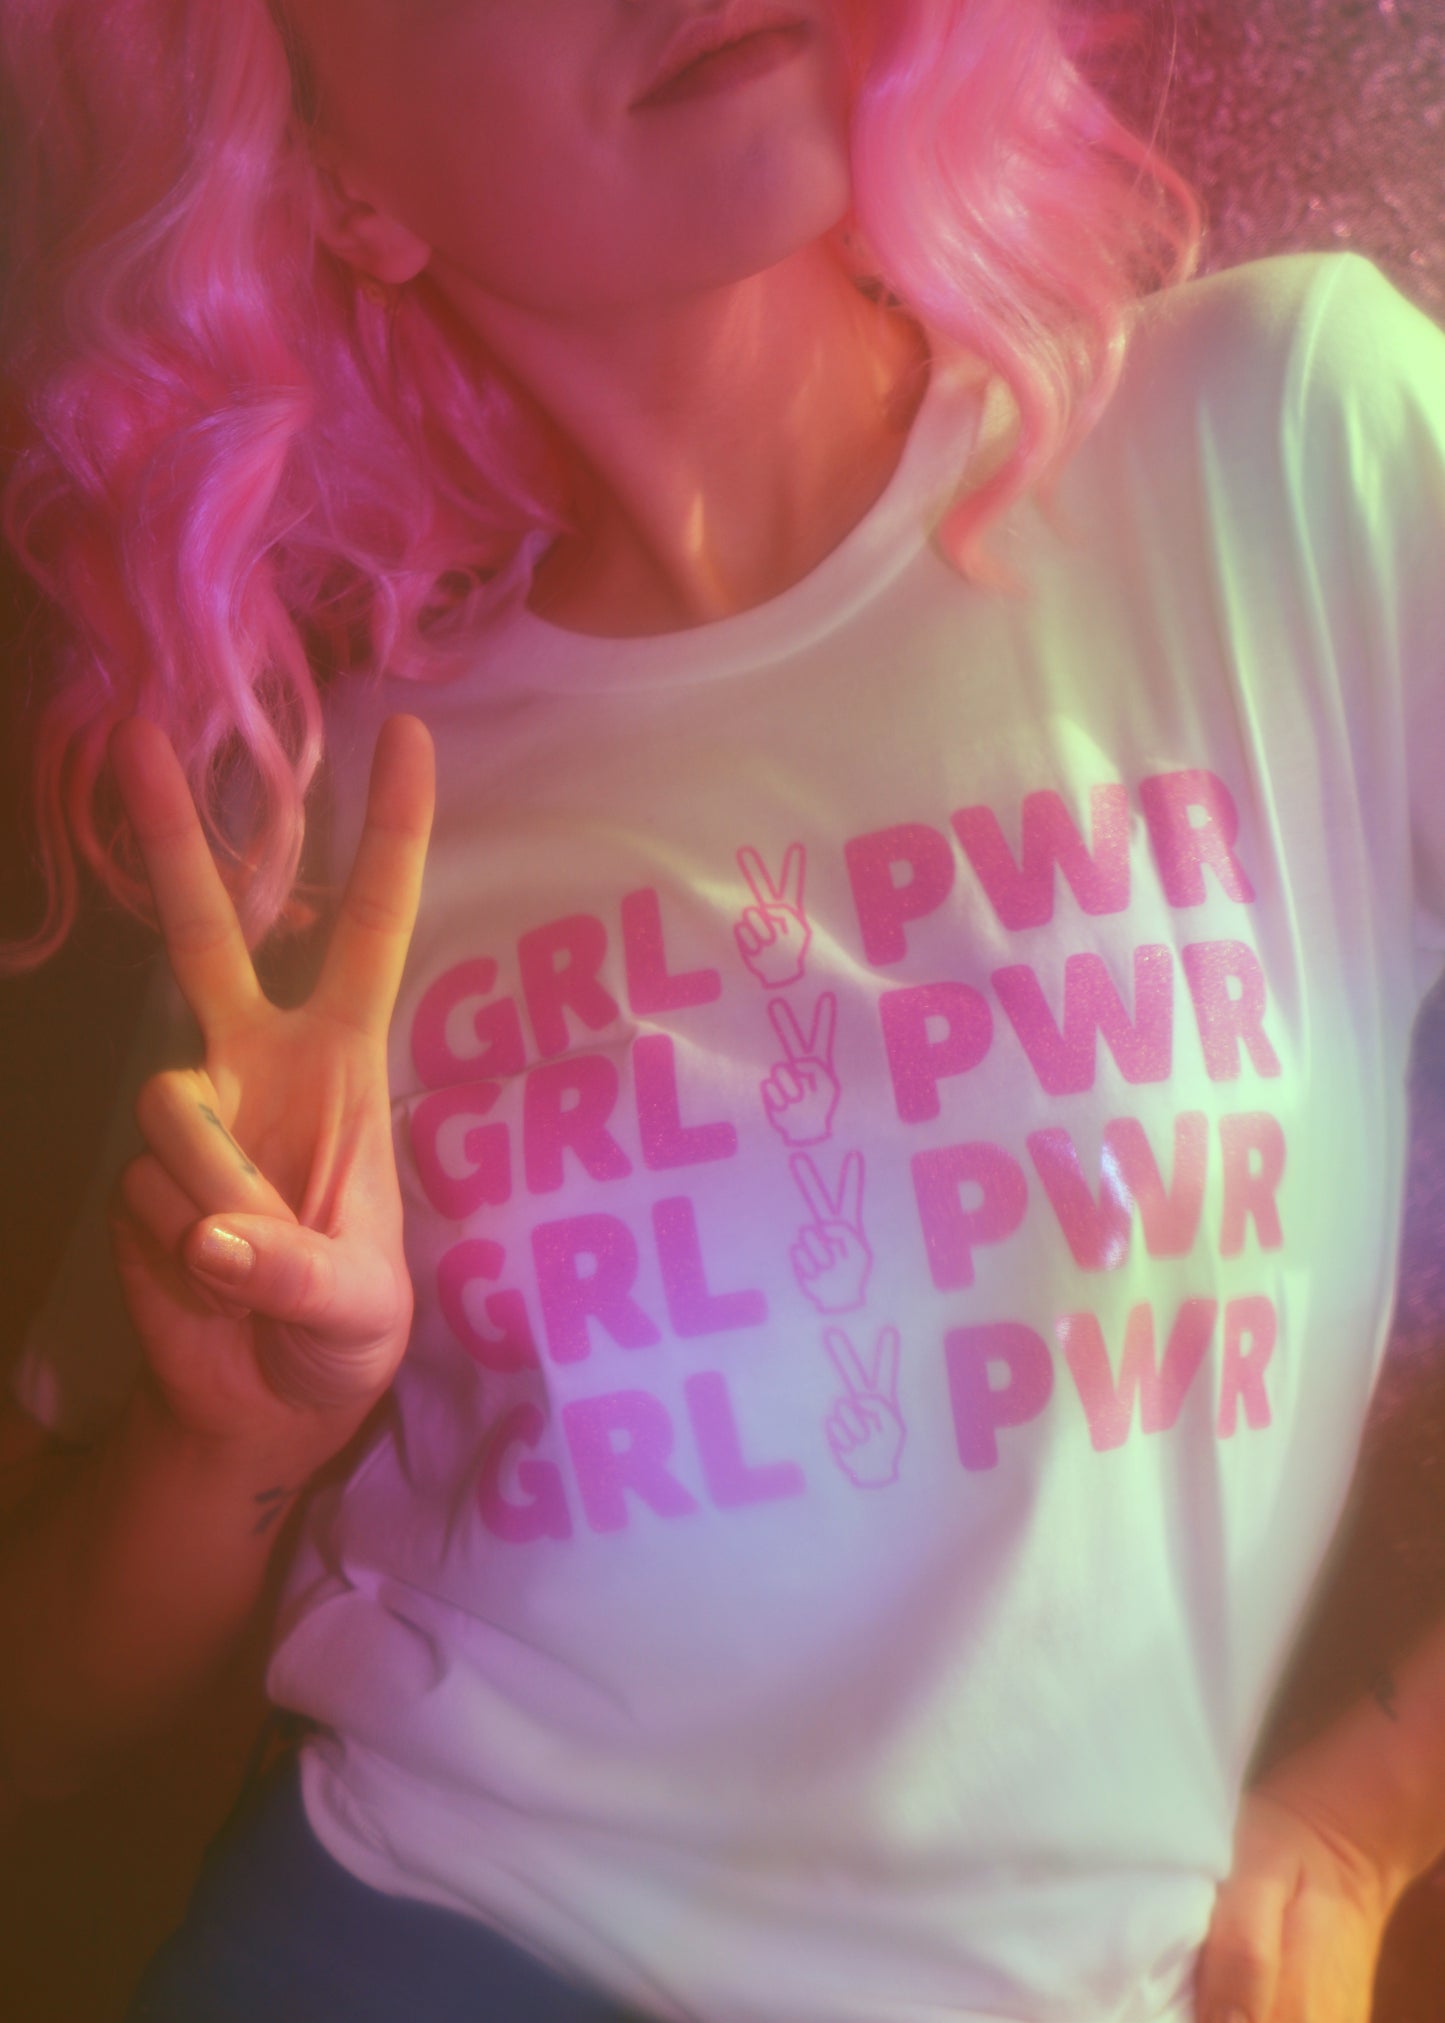   - Girl Power Glitter Tee - REDWOLF